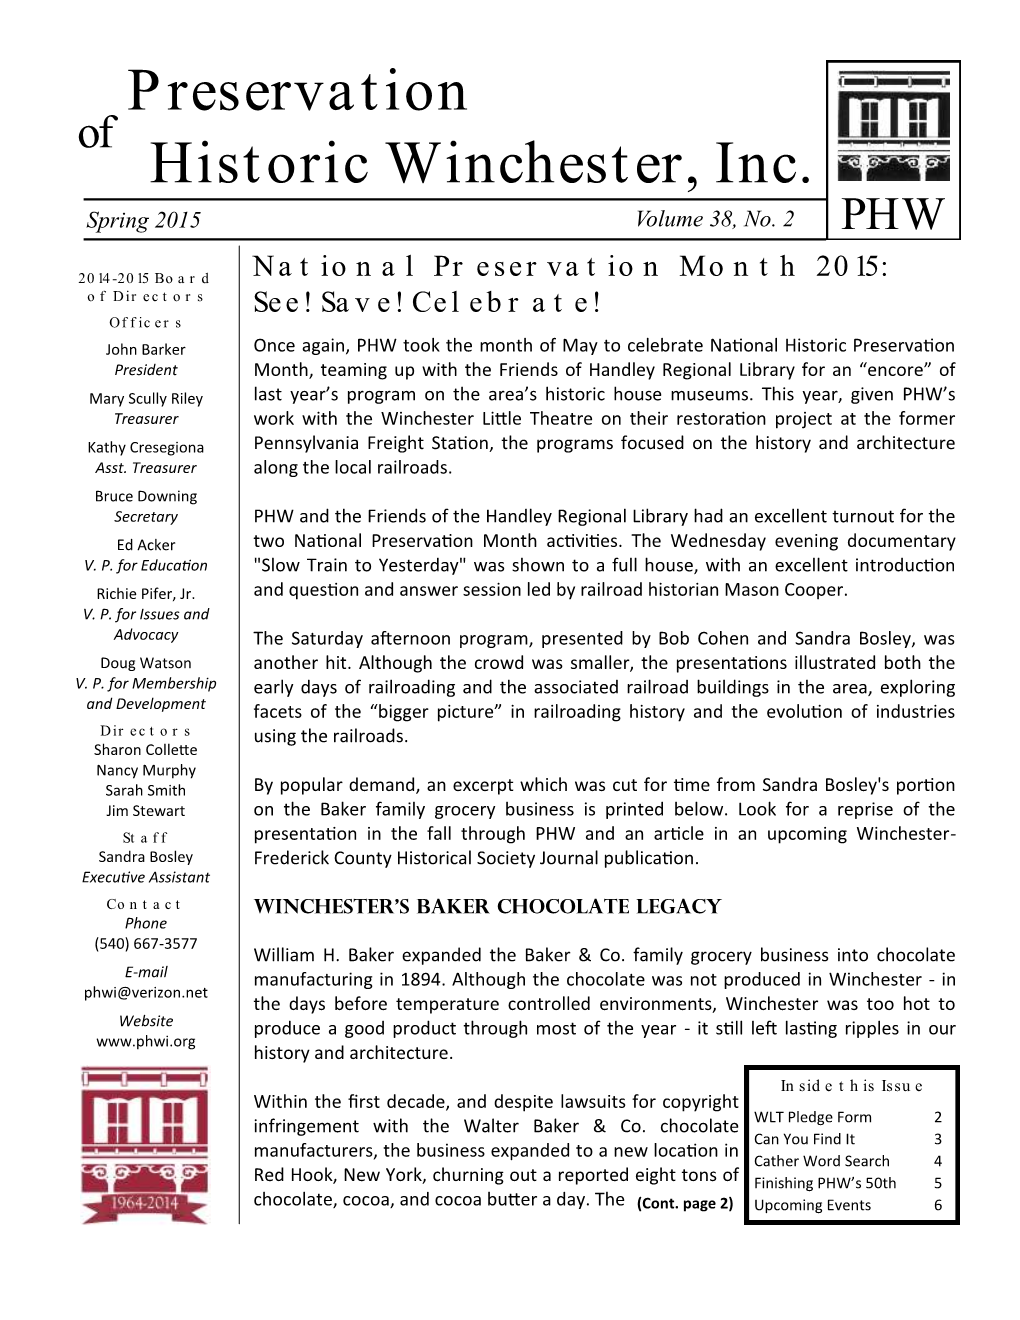 Historic Winchester, Inc. Preservation